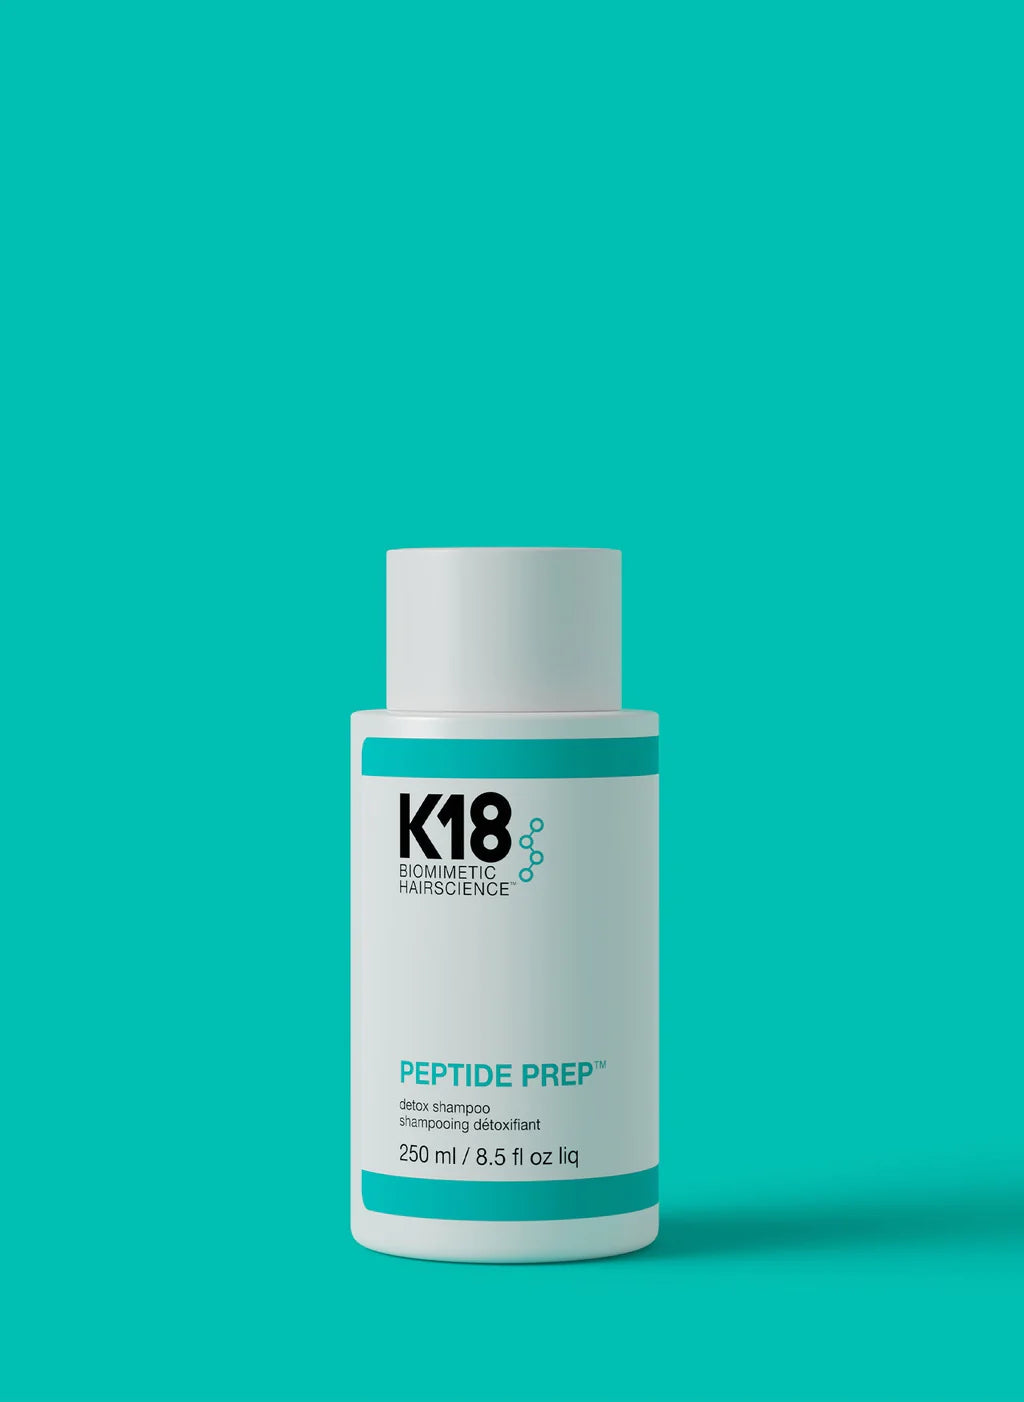 K18 Biomimetic Hairscience Peptide Prep Clarifying Detox Shampoo